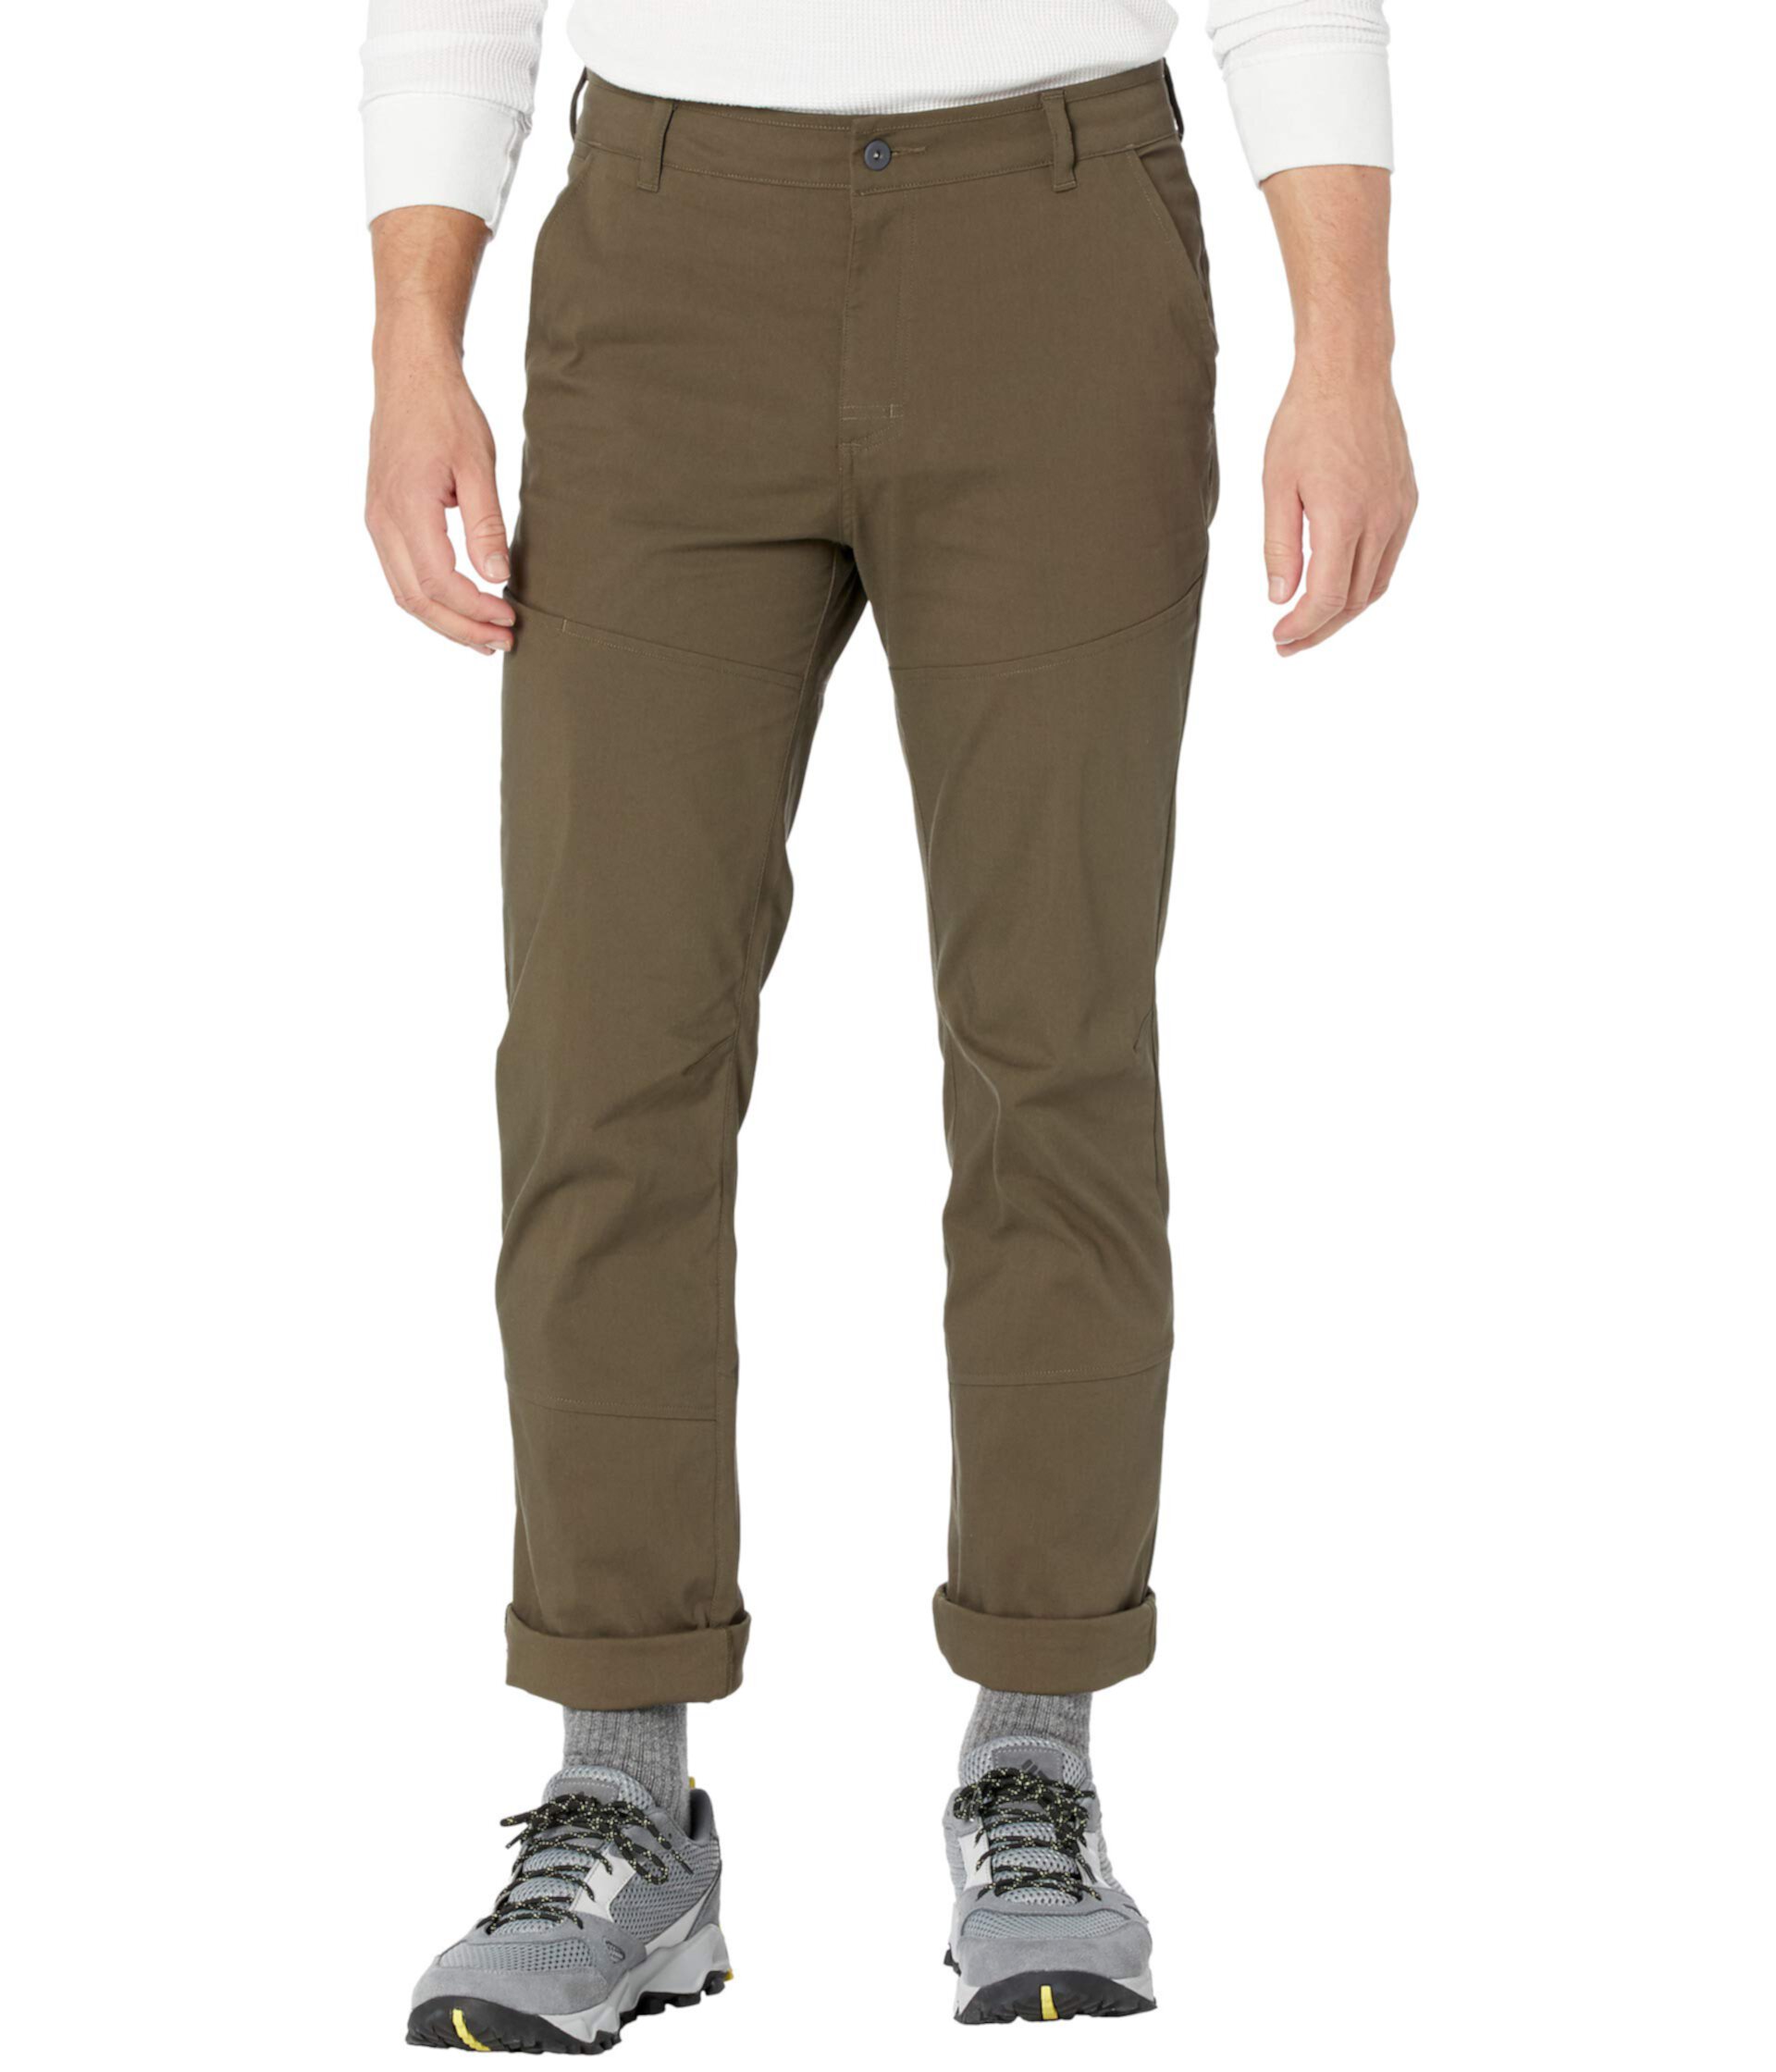 Казуальные штаны Hardwear AP™ от Mountain Hardwear для мужчин Mountain Hardwear